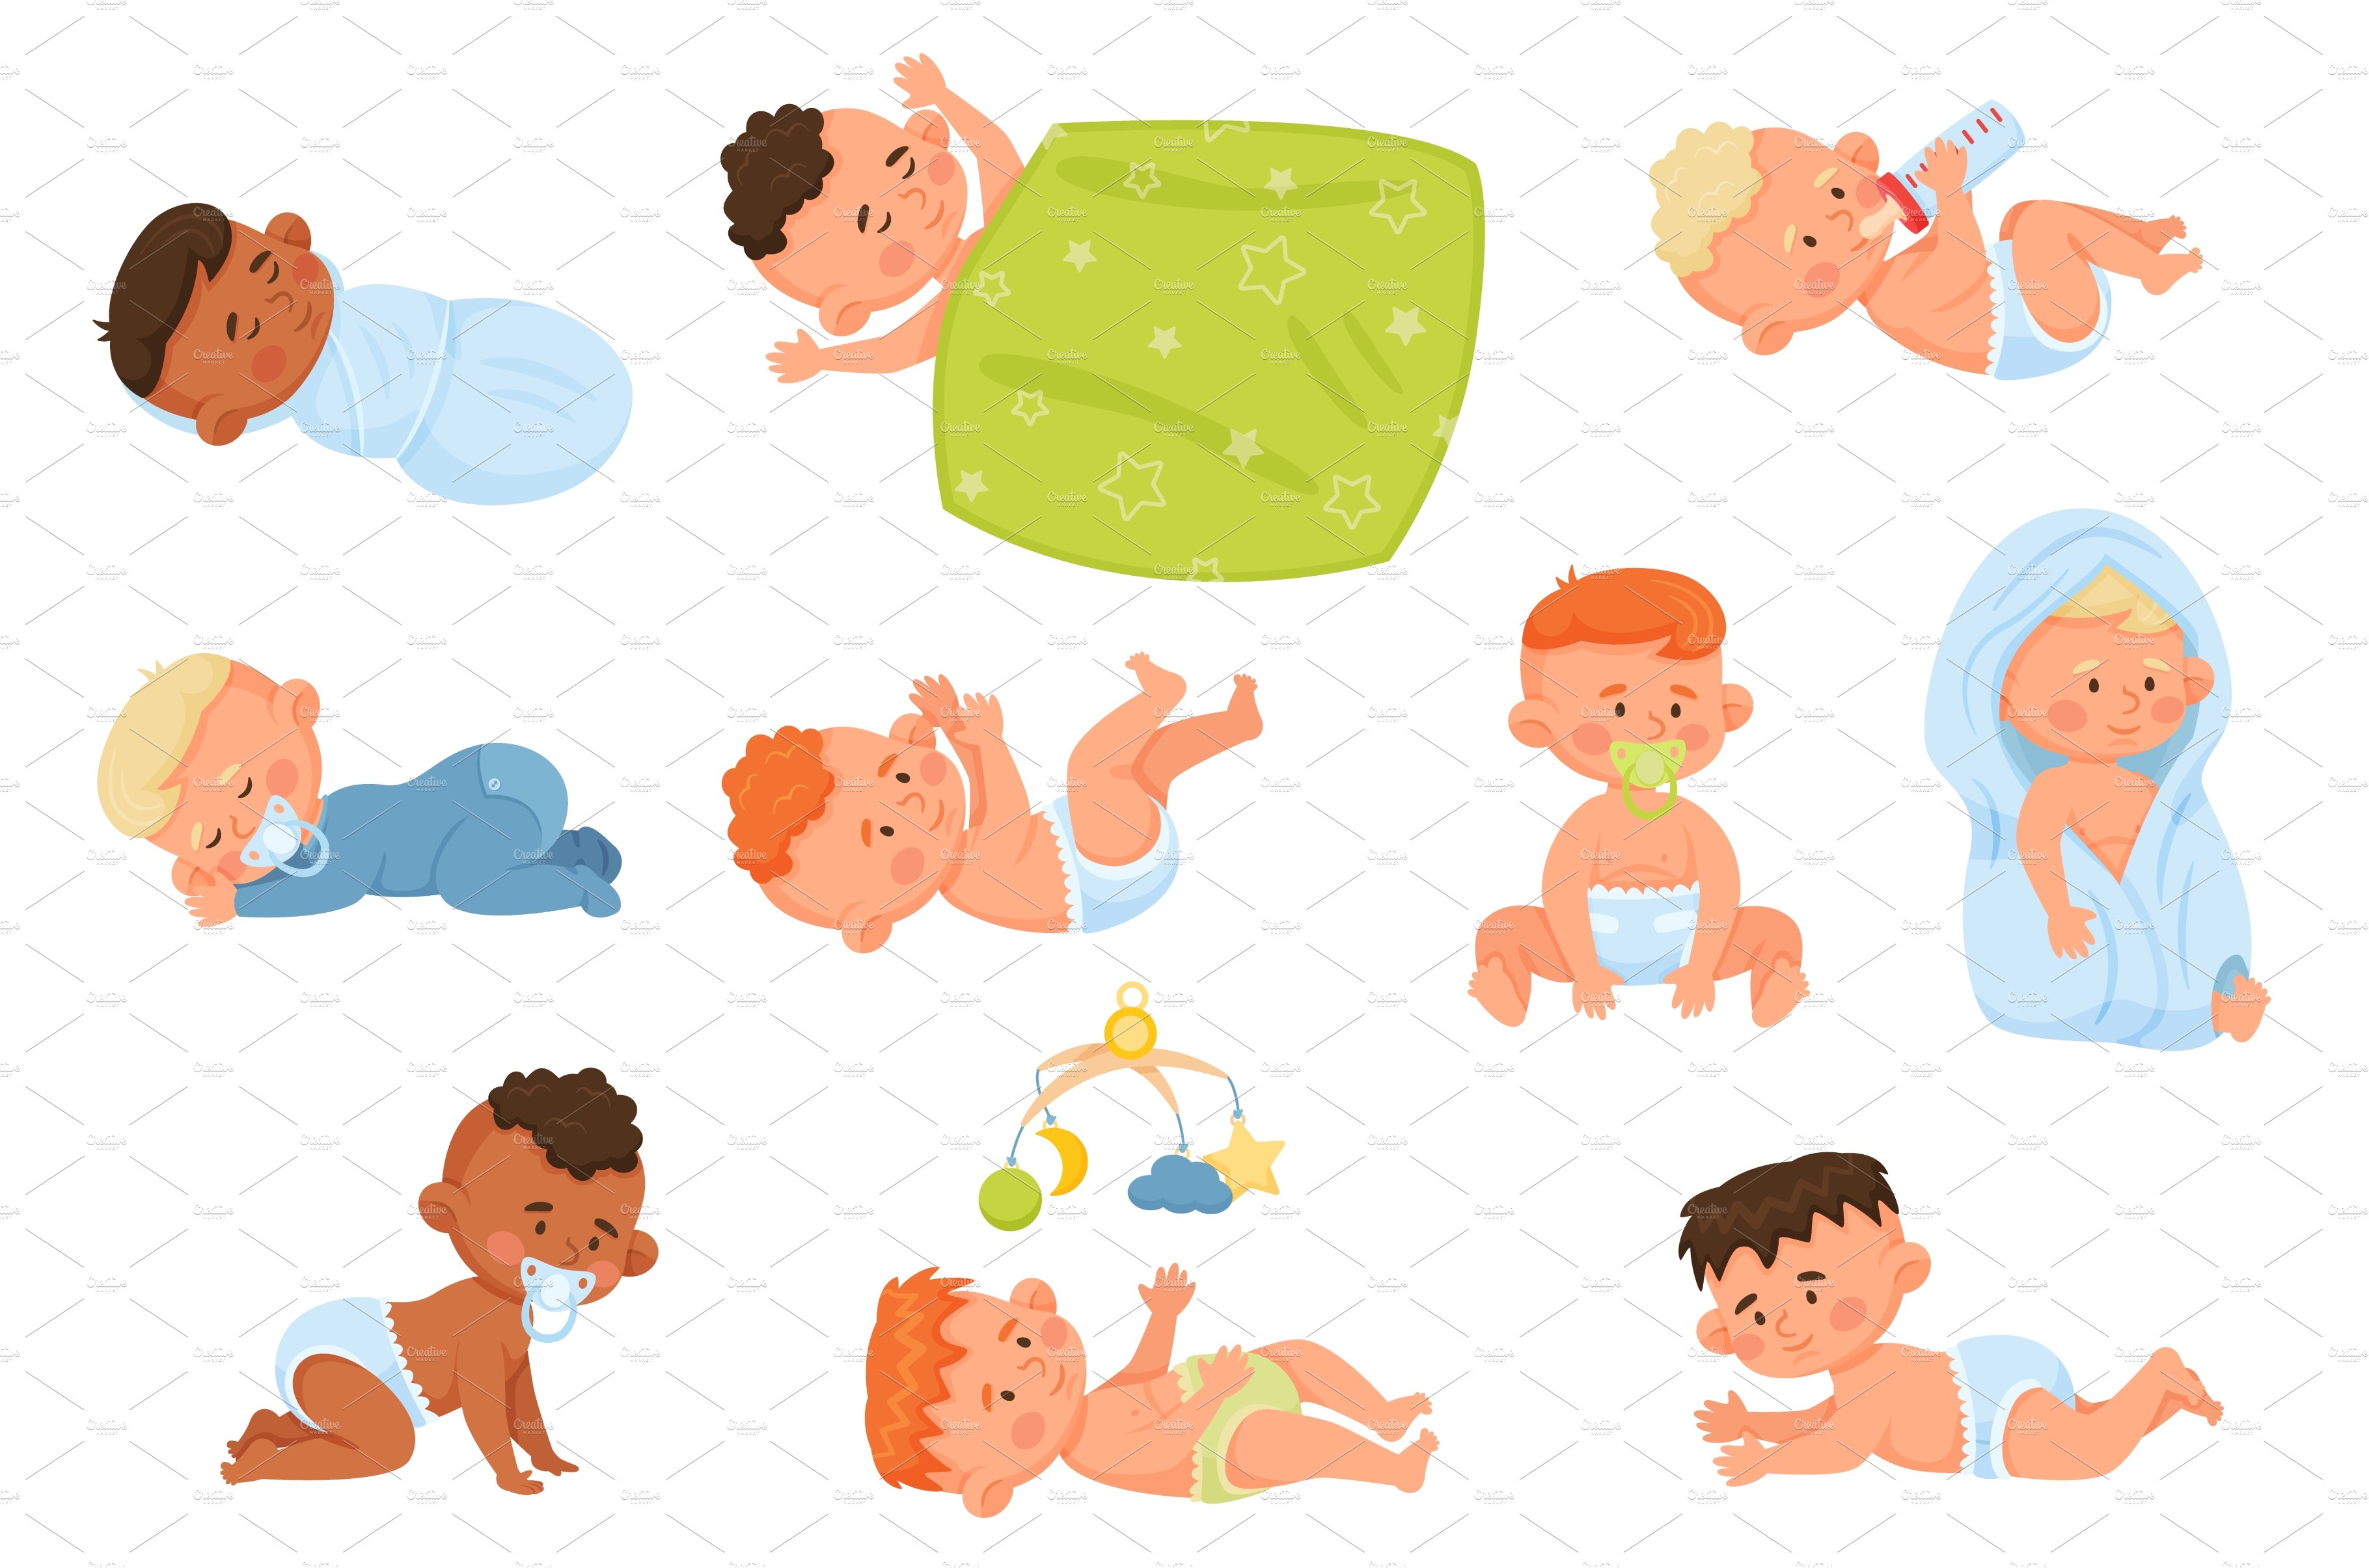 Cartoon babies, cute newborn infants cover image.